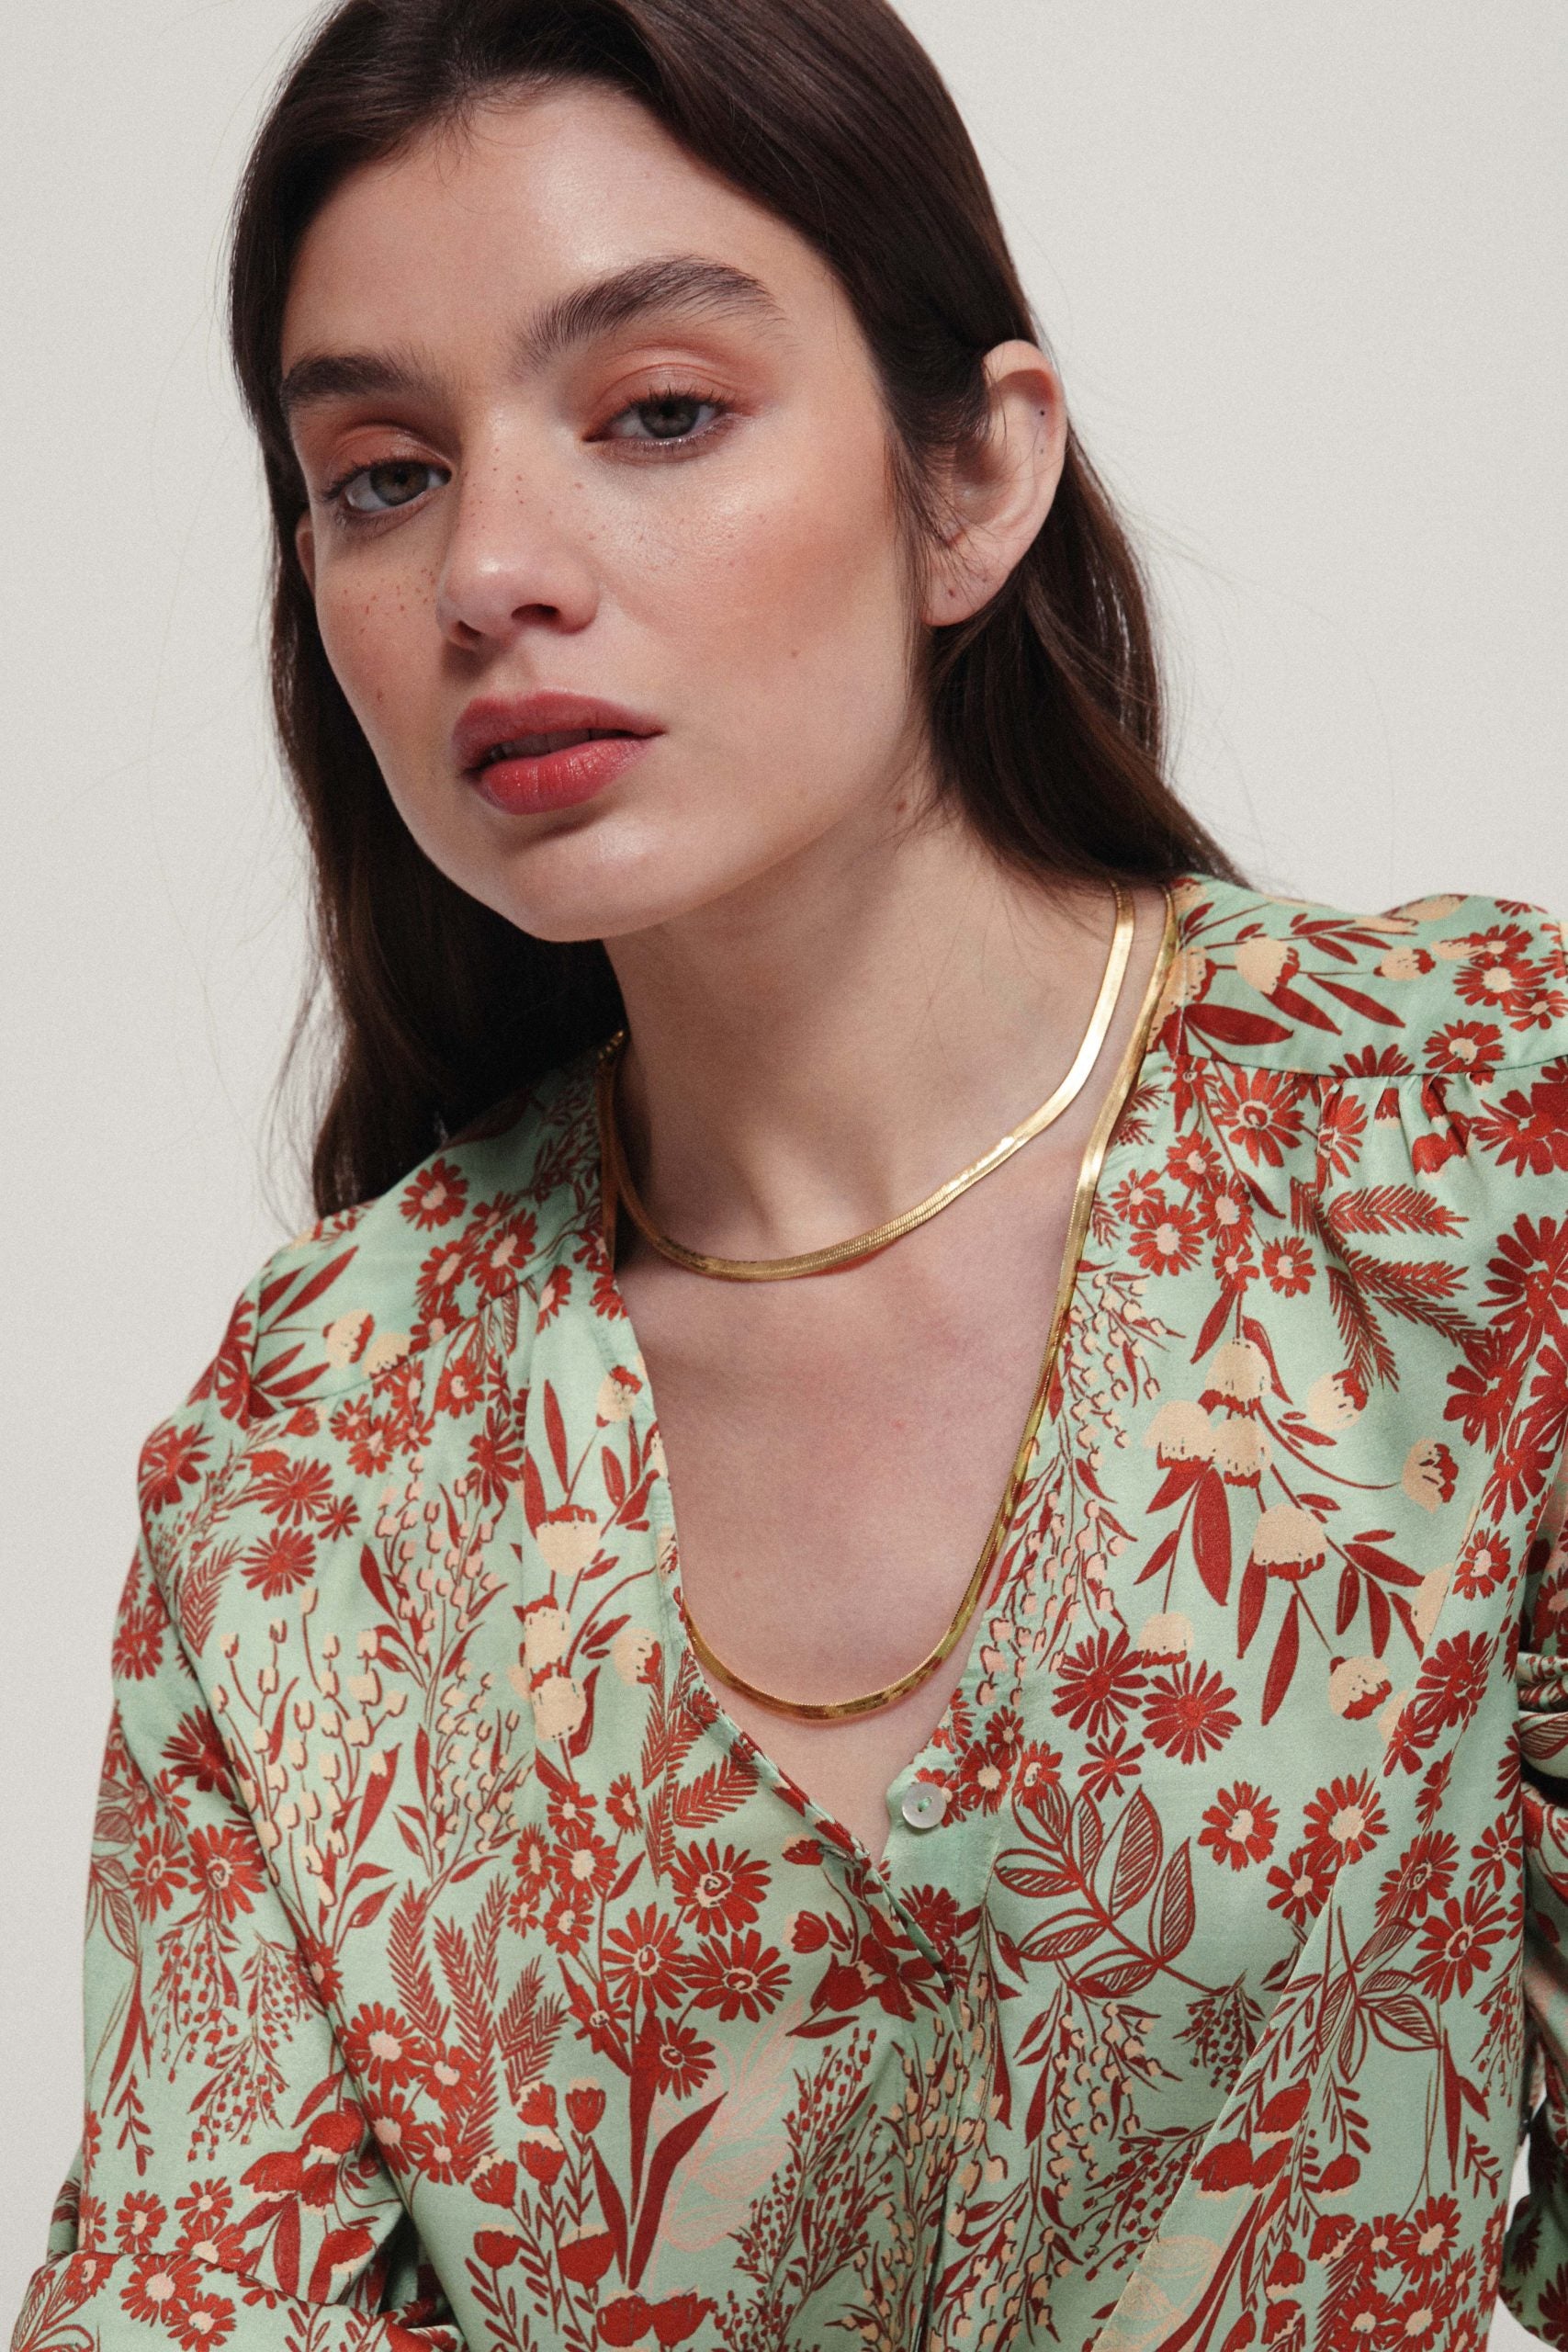 MERANA forest print blouse